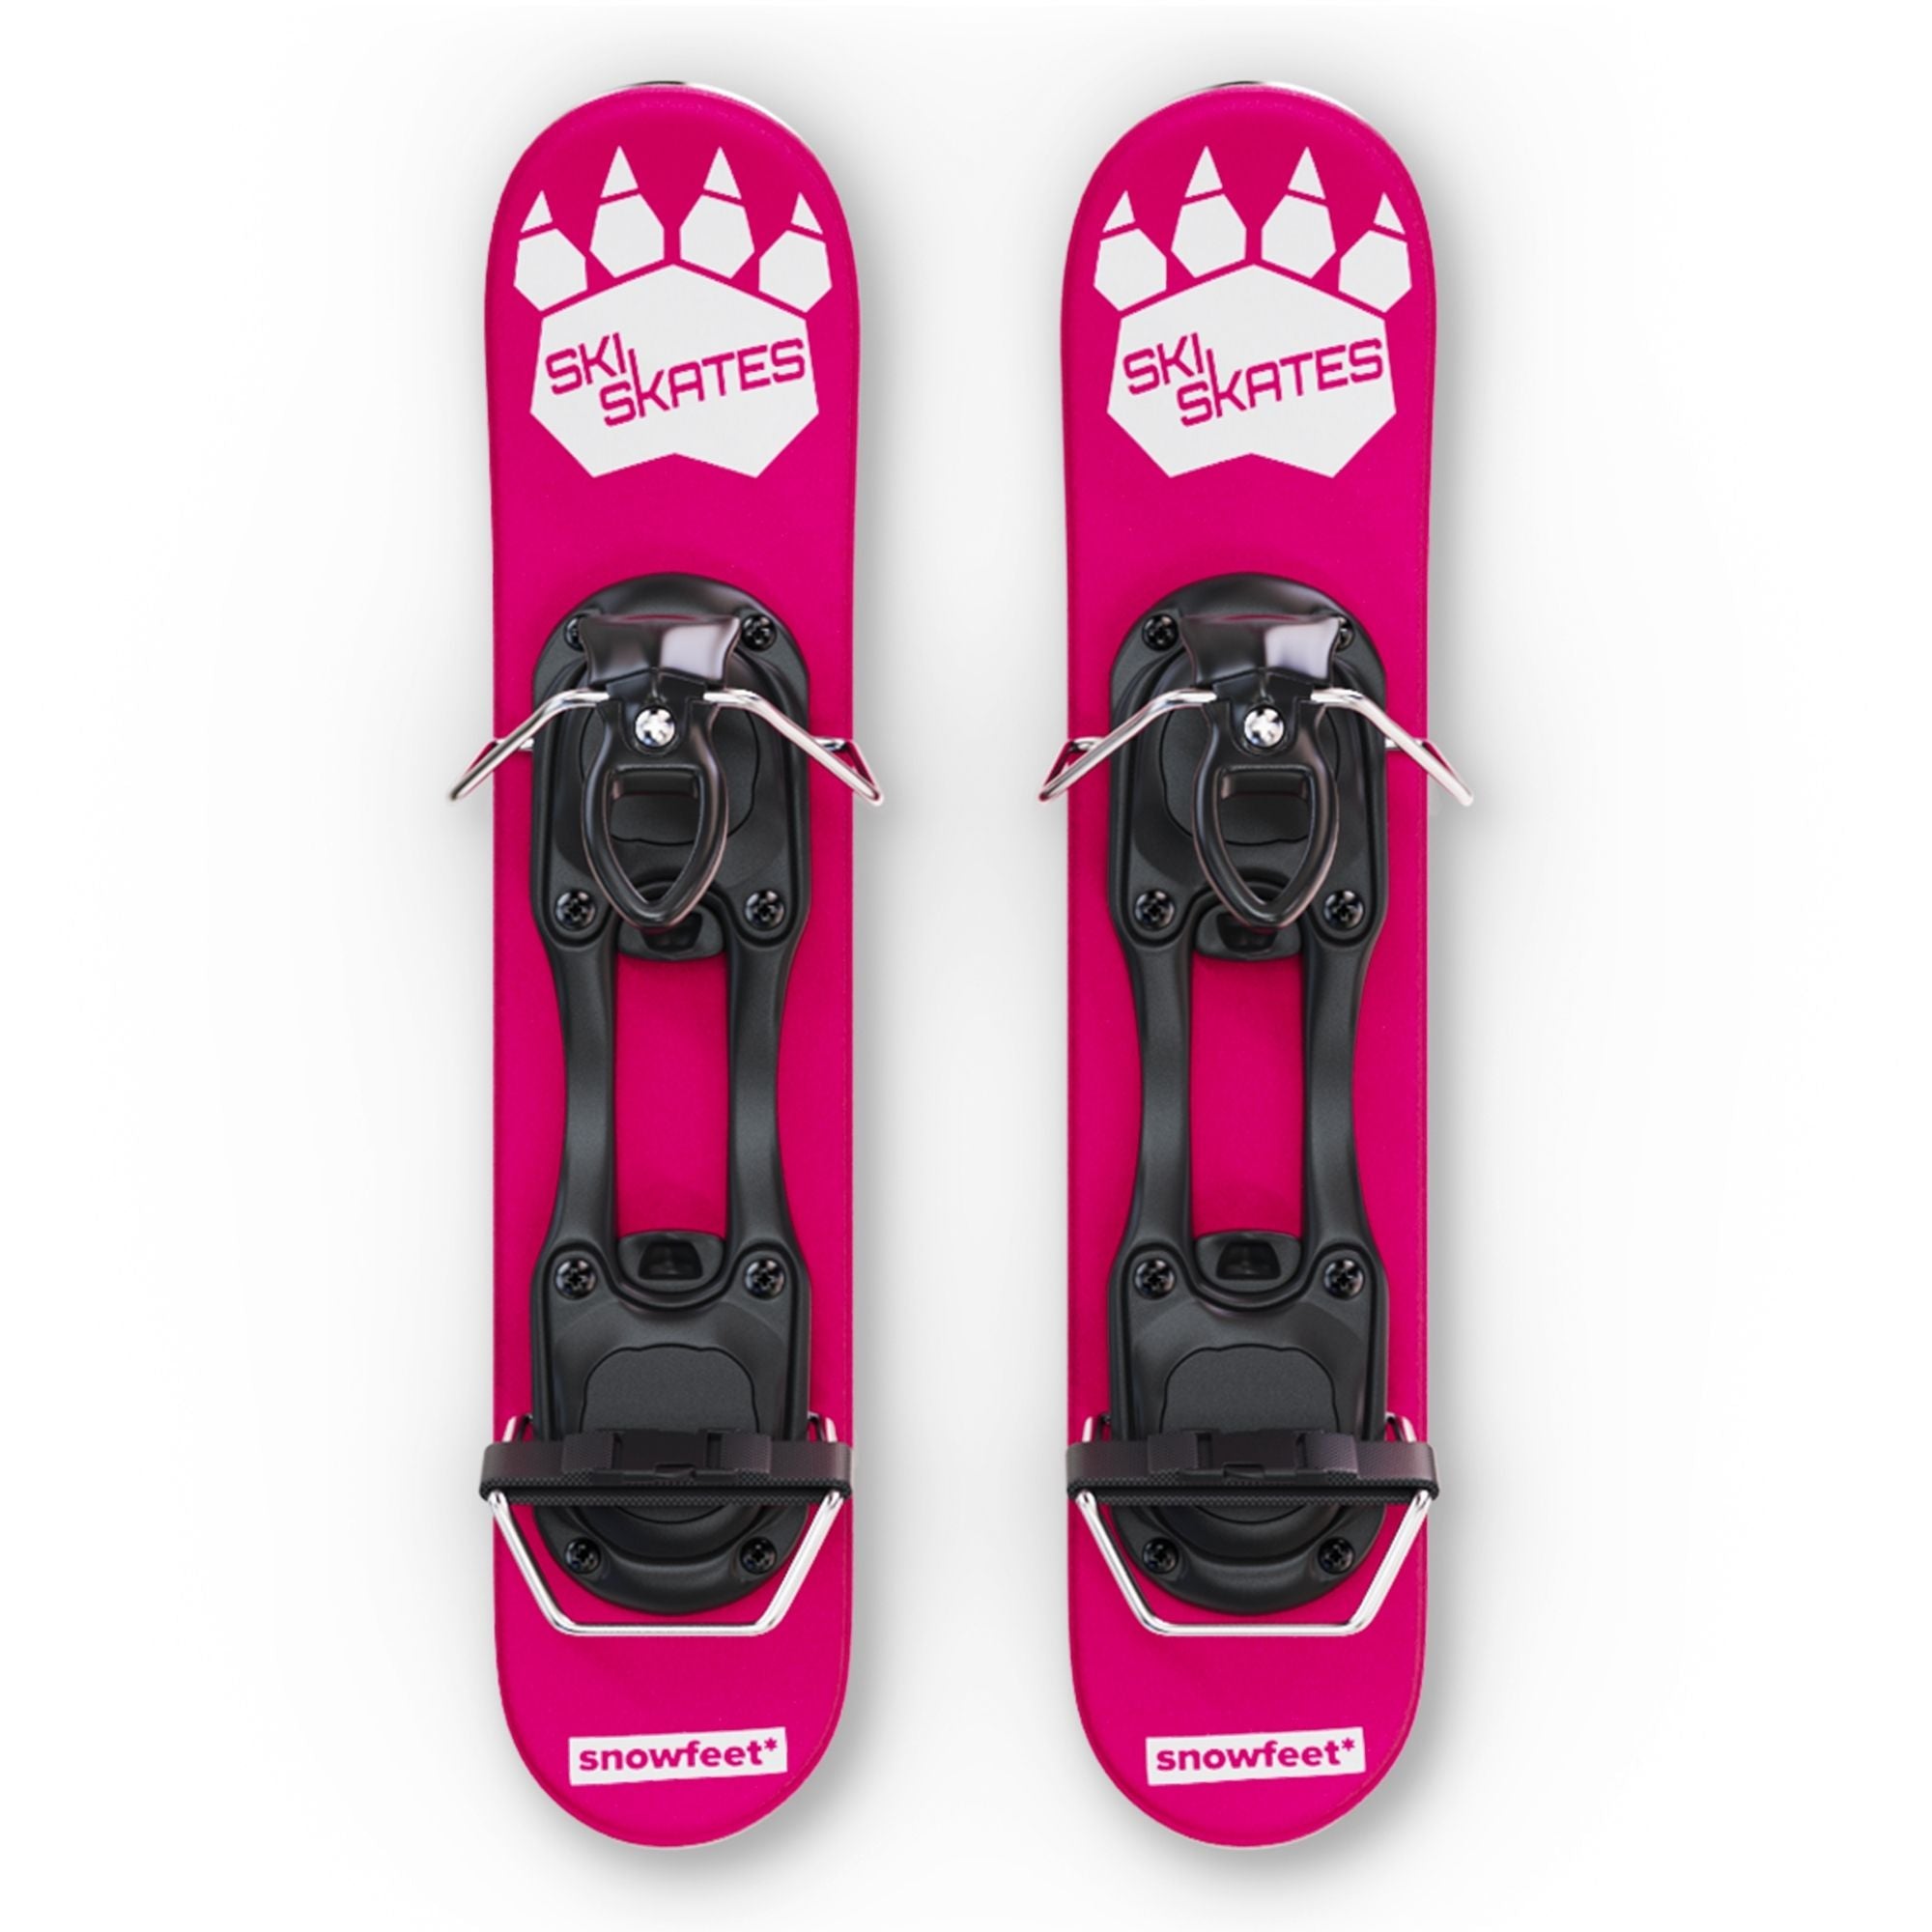 Skiskates - Mini Ski Skates  Ski Boots Model - Official Product